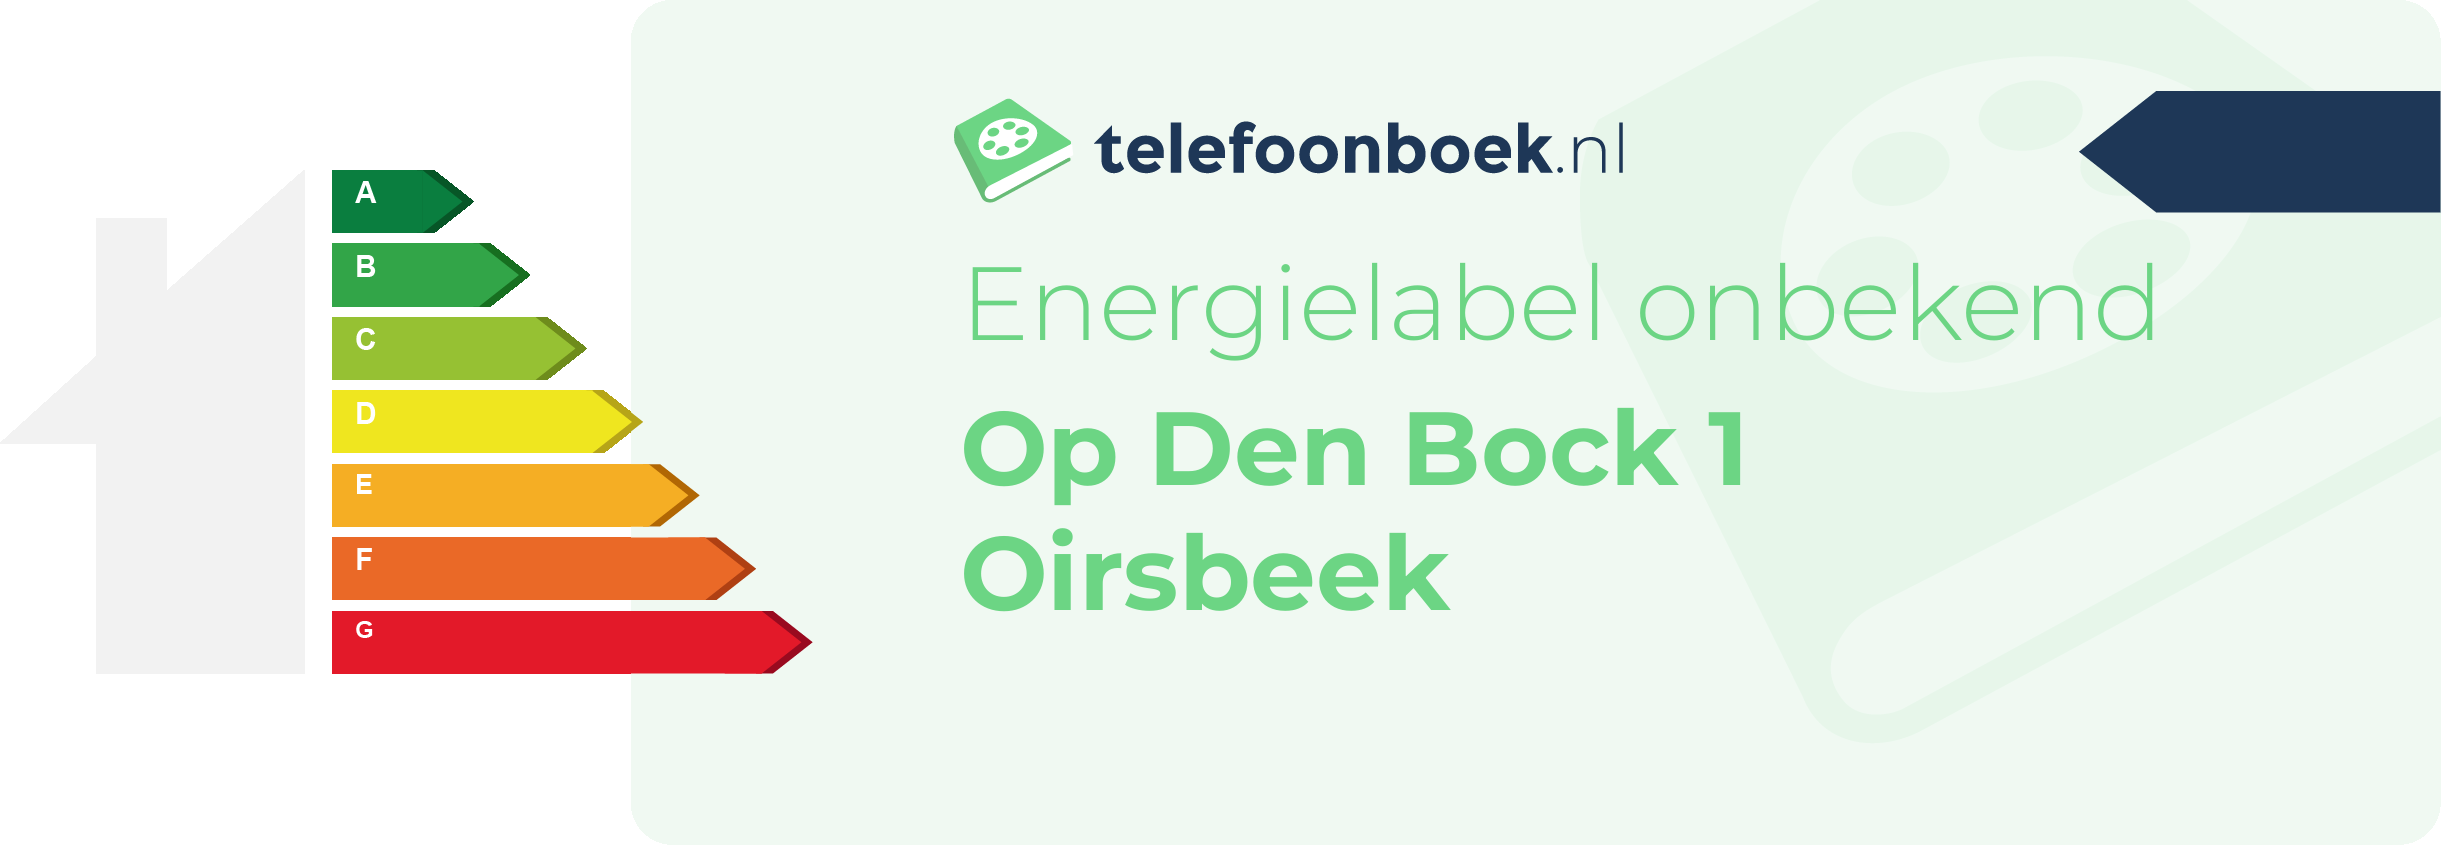 Energielabel Op Den Bock 1 Oirsbeek